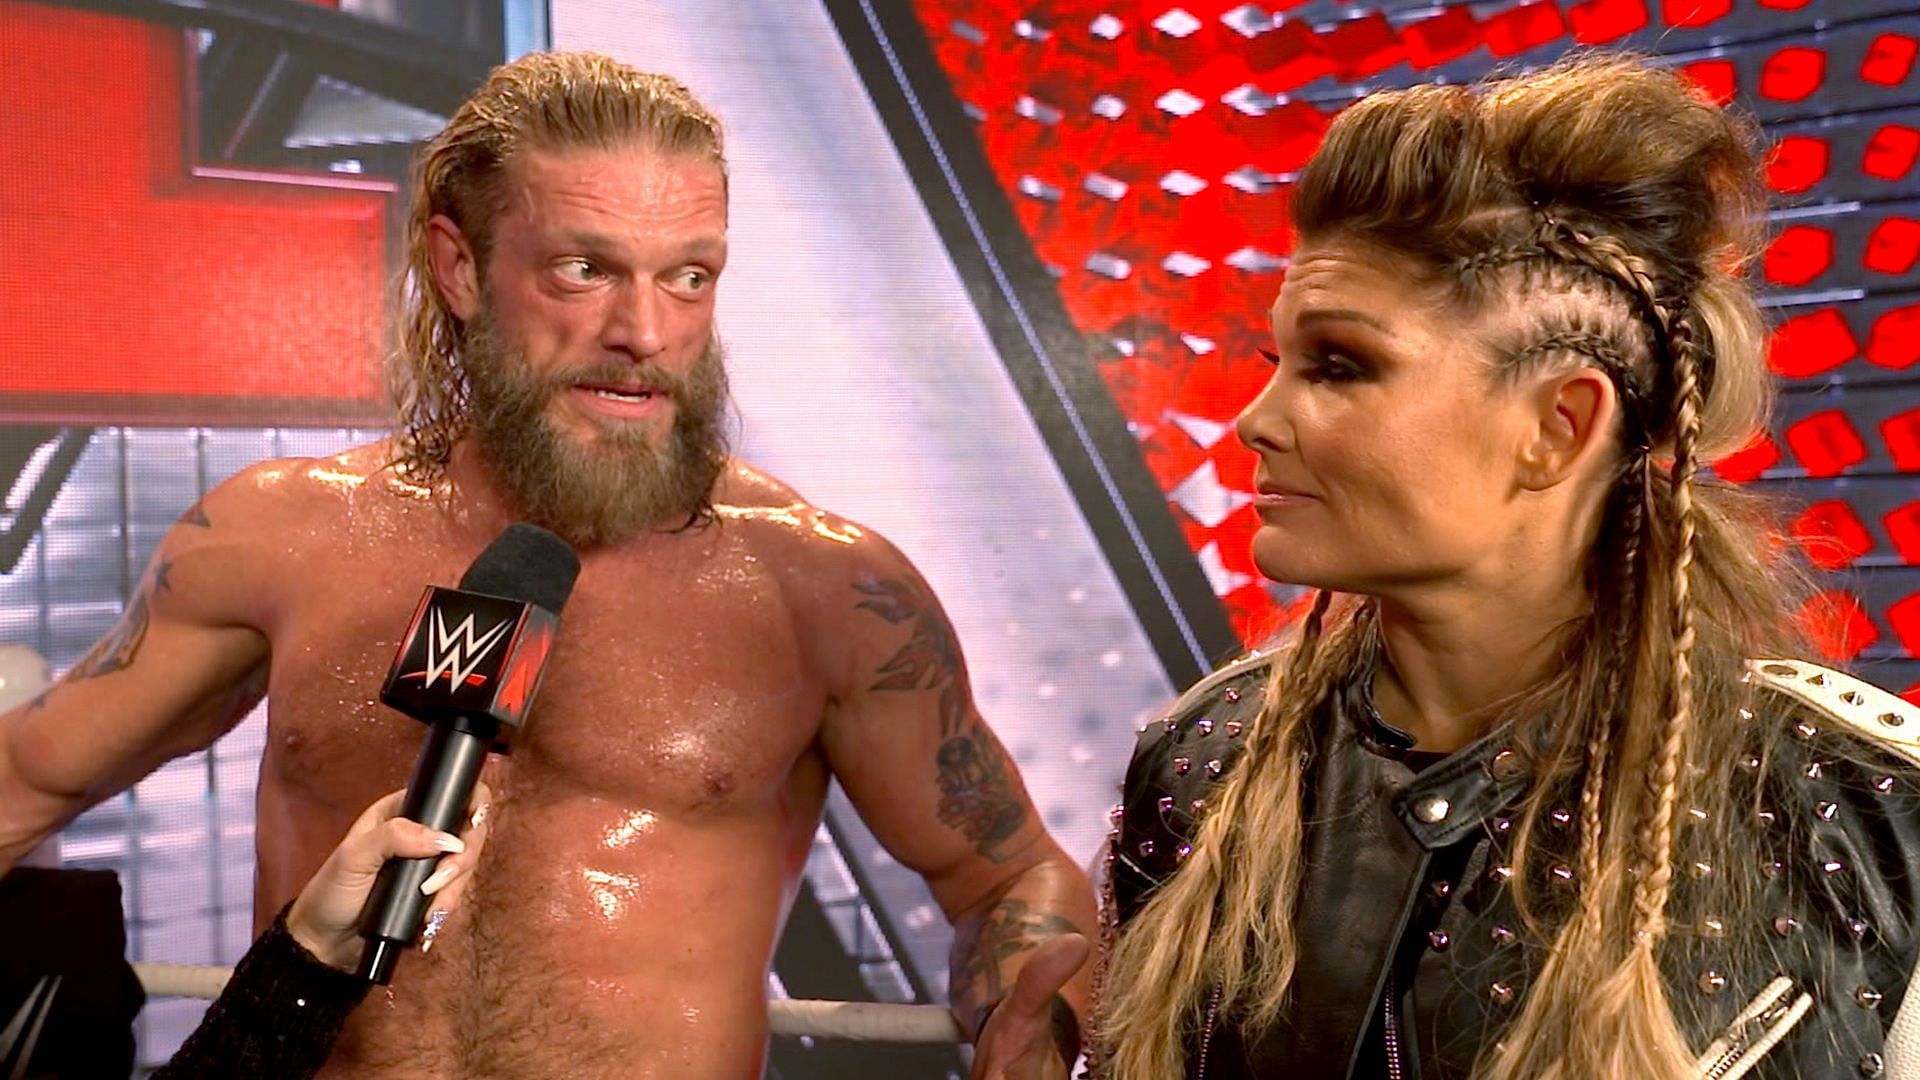 WWE Hall of Famers Edge and Beth Phoenix